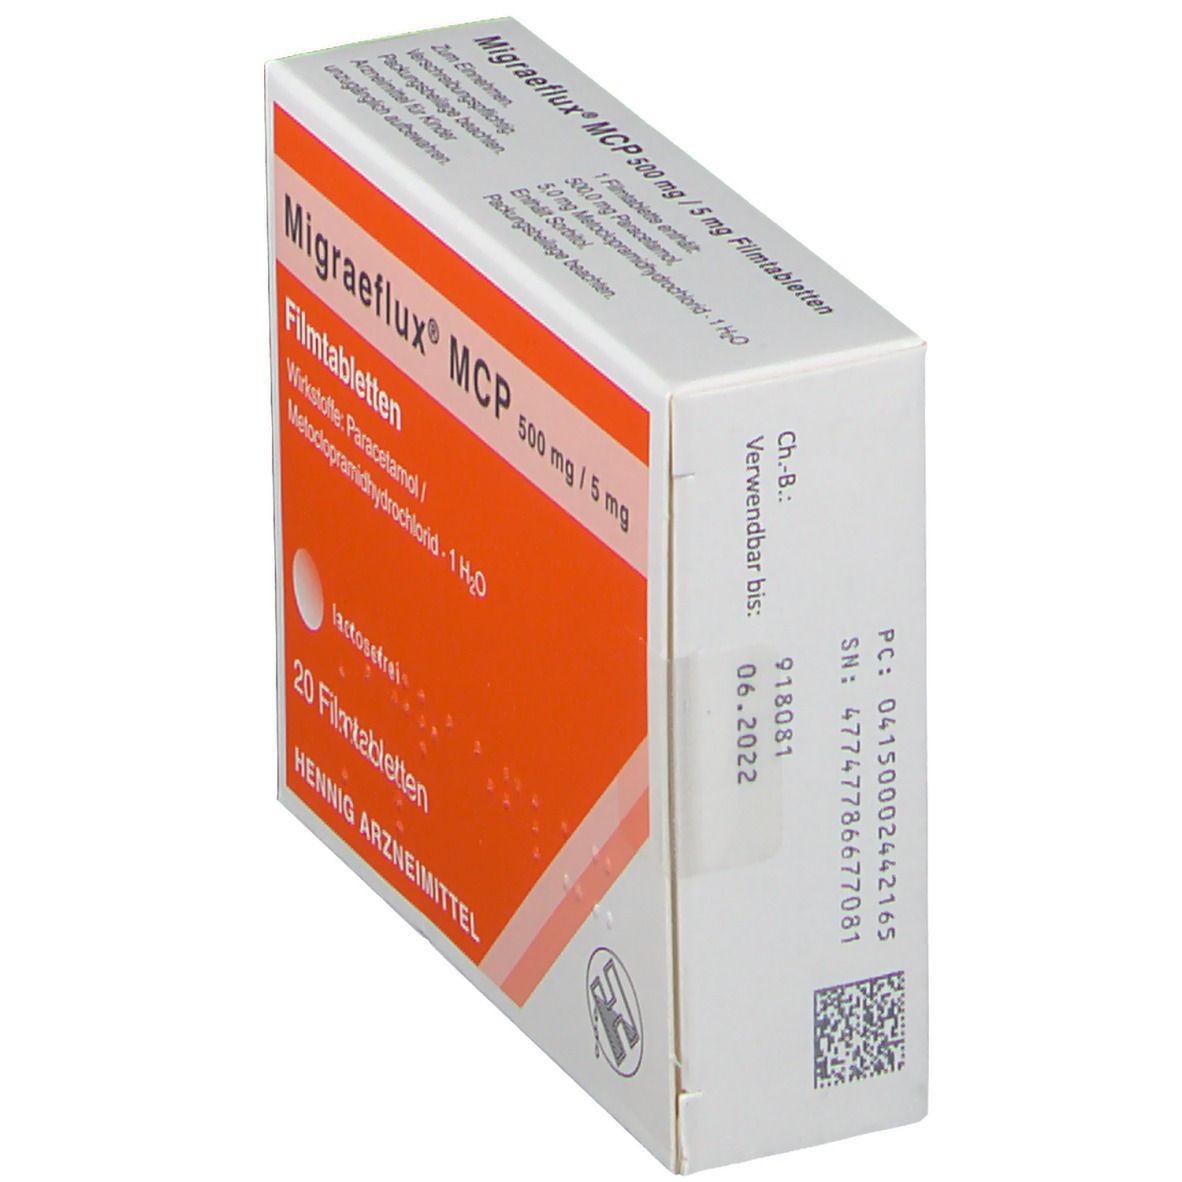 Migraeflux® MCP 500 mg/5 mg